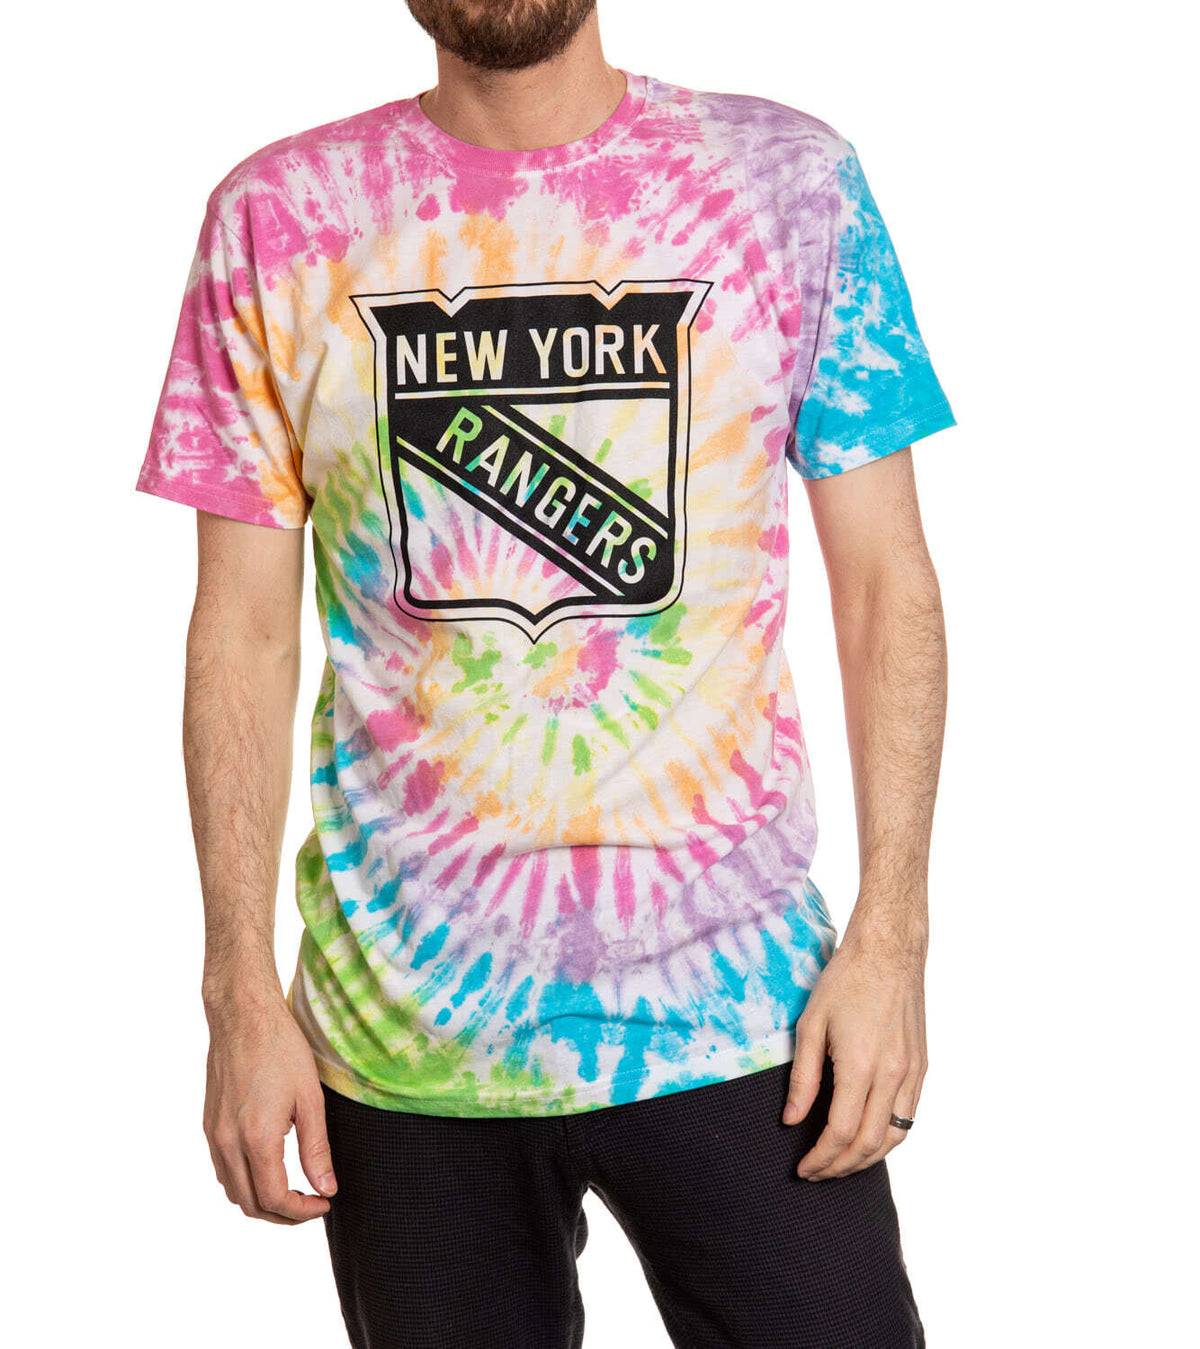 New York Rangers Pastel Rainbow Tie Dye T-Shirt